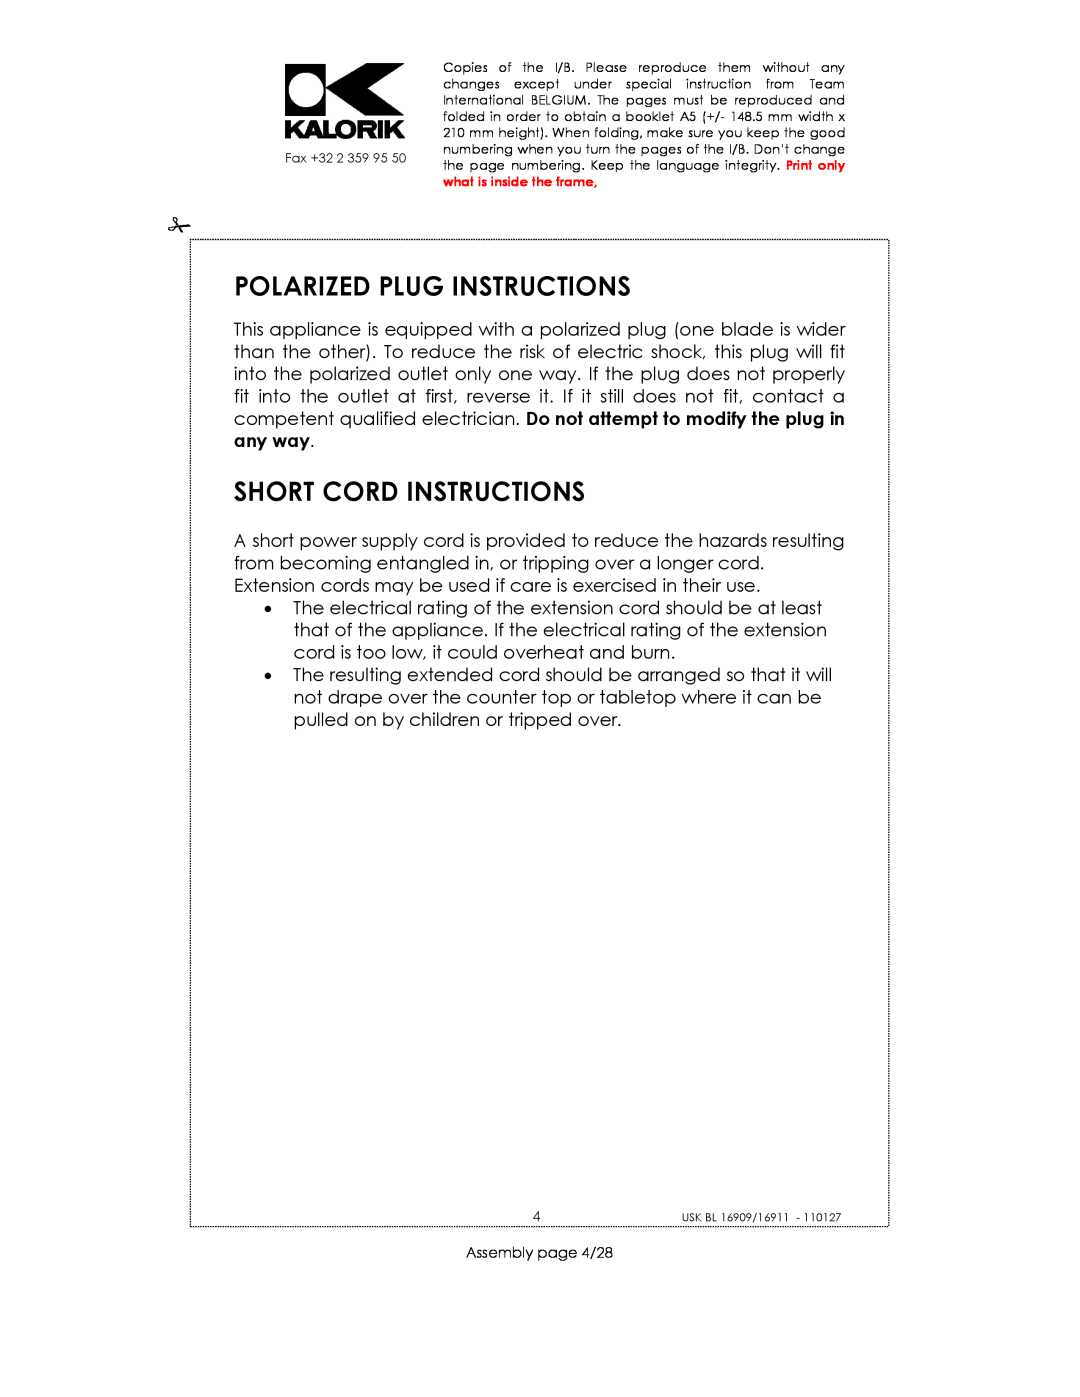 Kalorik 33029, usk bl 16909, 16911 manual Polarized Plug Instructions, Short Cord Instructions, Assembly page 4/28 